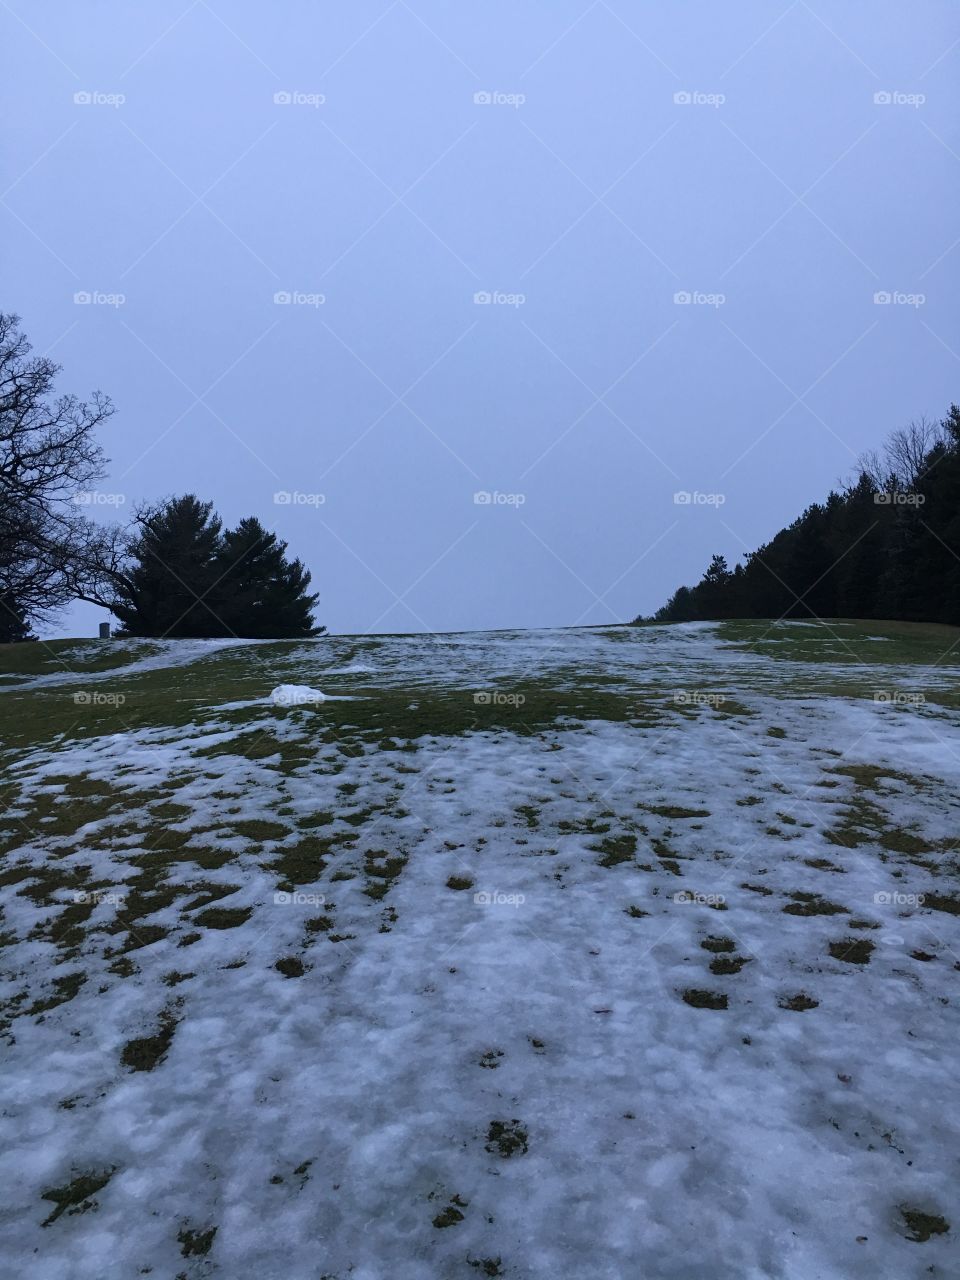 Golf corse in the late winter 
